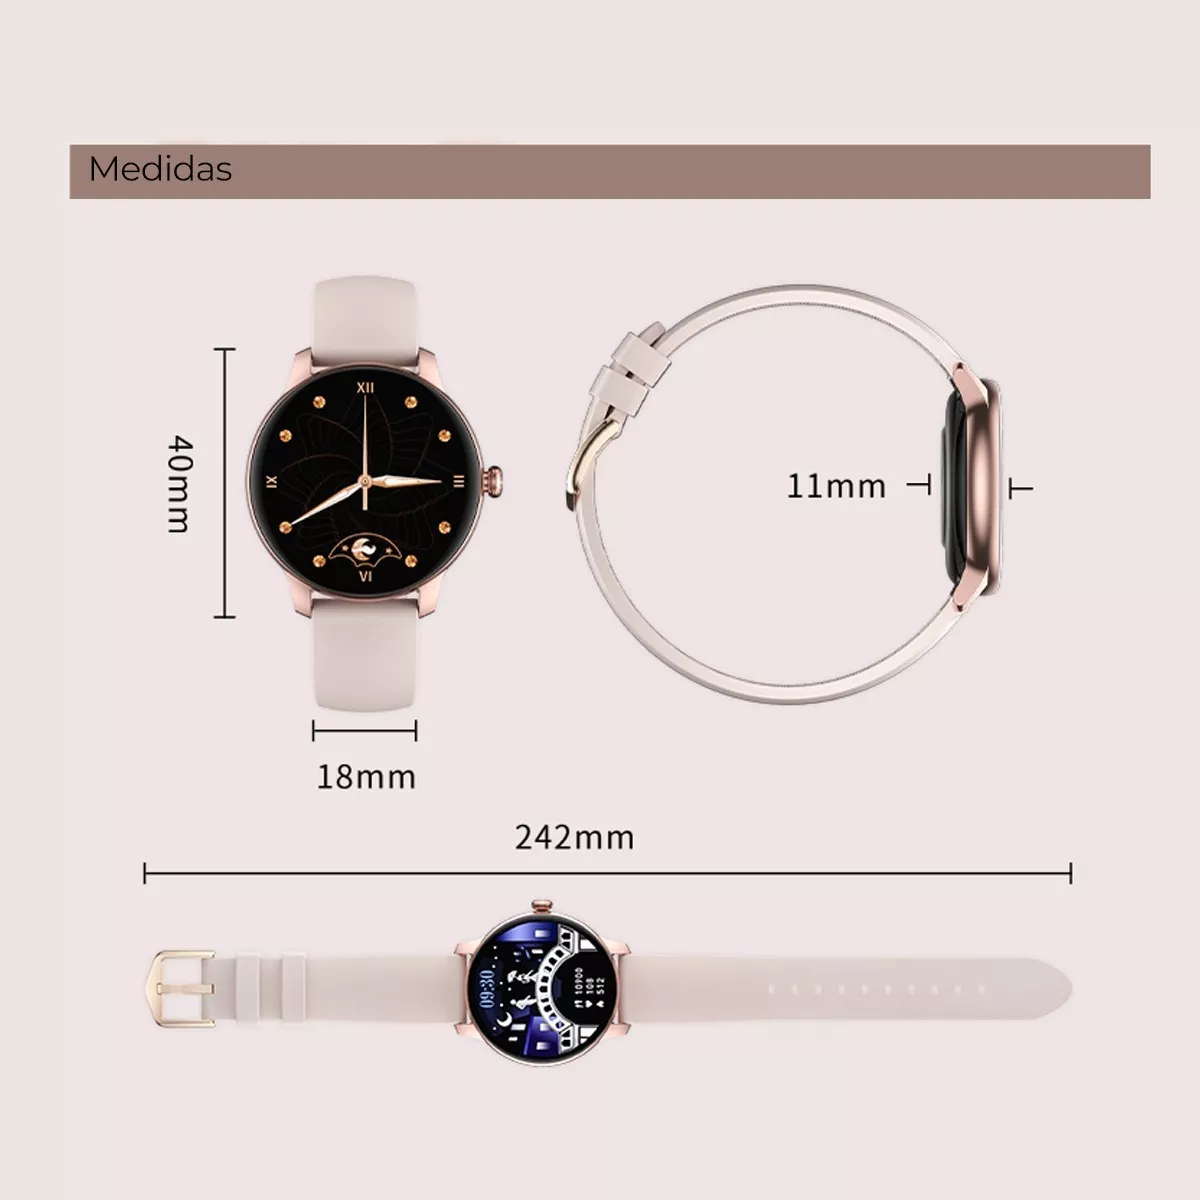 Reloj Inteligente Smartwatch Lady Xiaomi Kieslect L11 Rosa